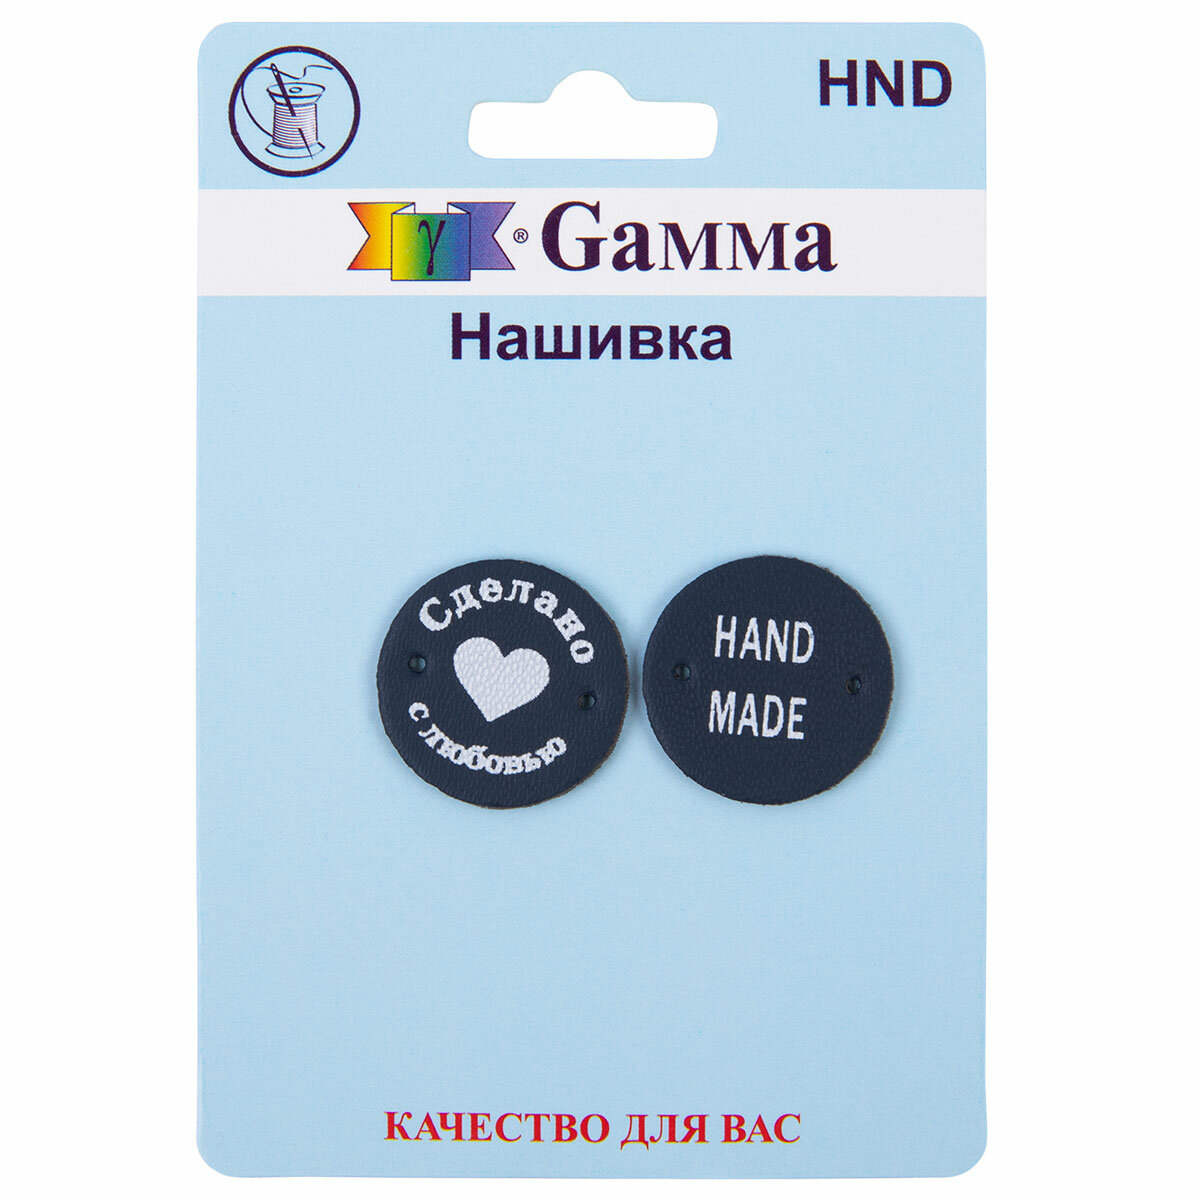 Нашивка "Gamma" HND-02 "handmade" 2 шт. 02-6 круг темно-синий